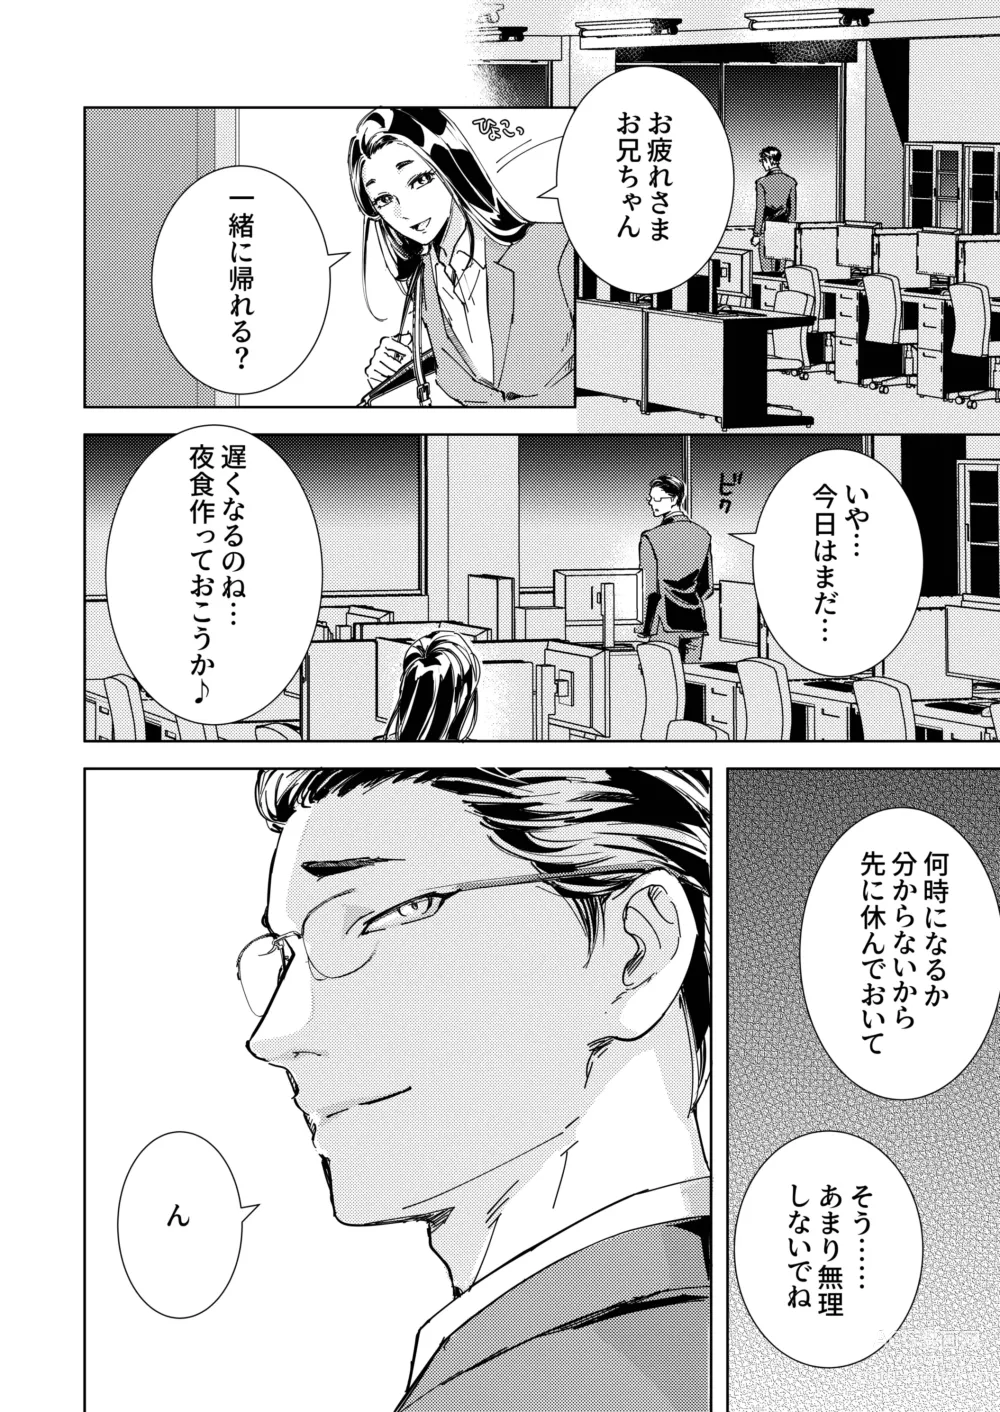 Page 29 of doujinshi Gisei